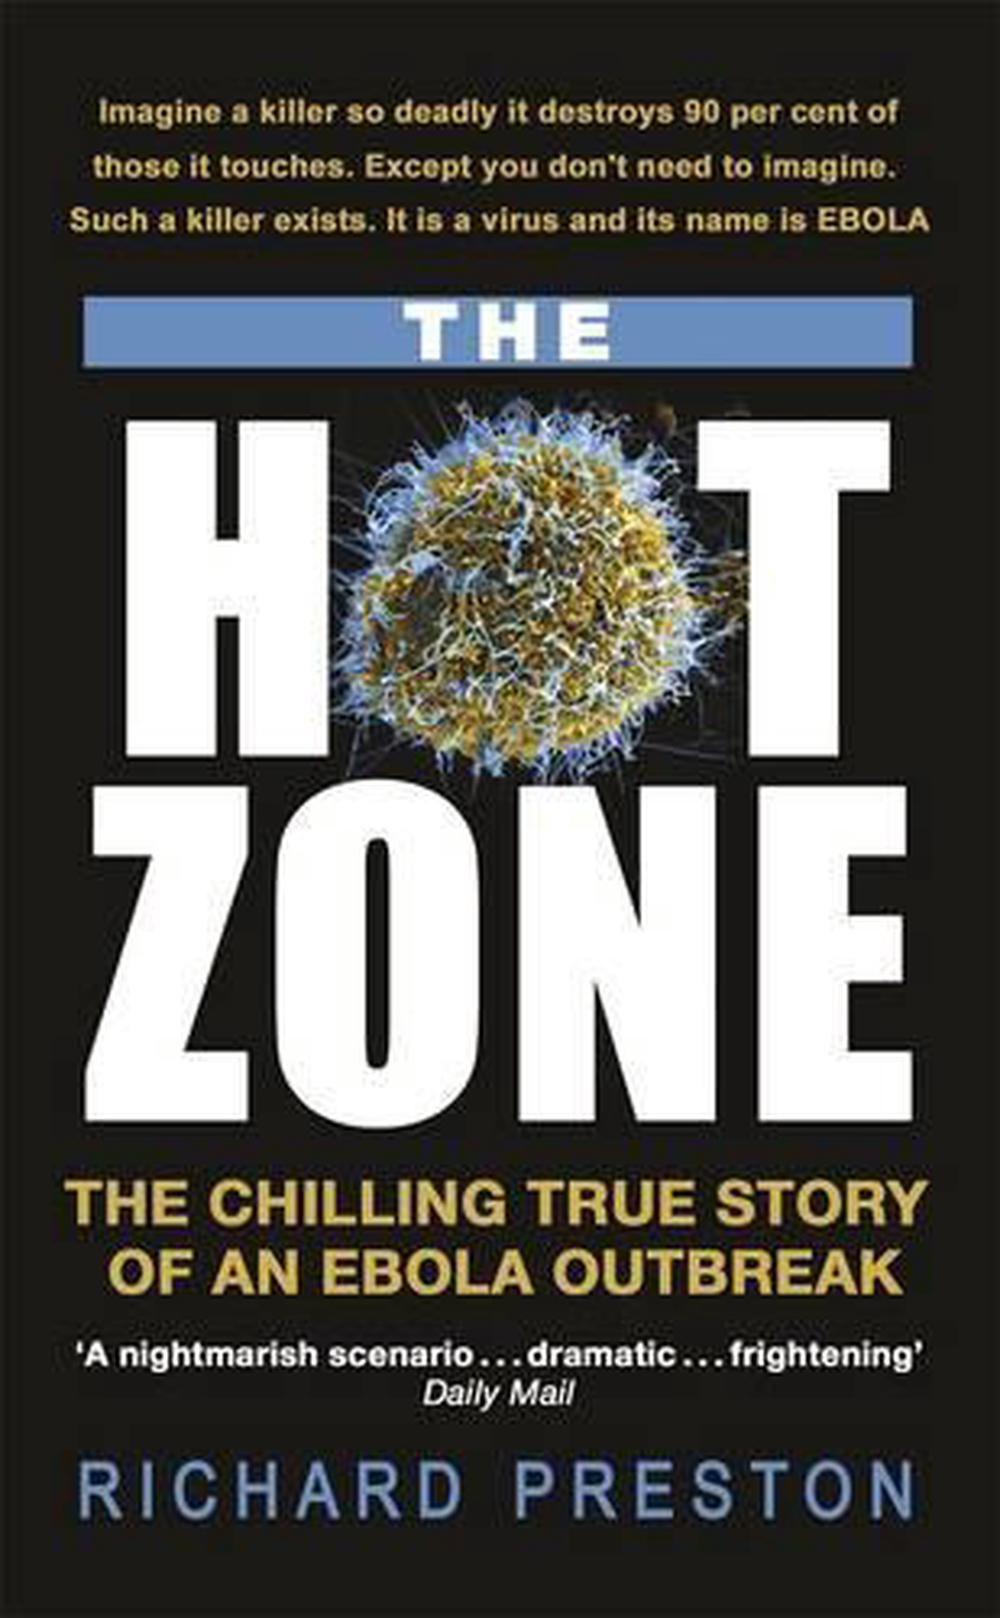 the hot zone richard preston audiobook